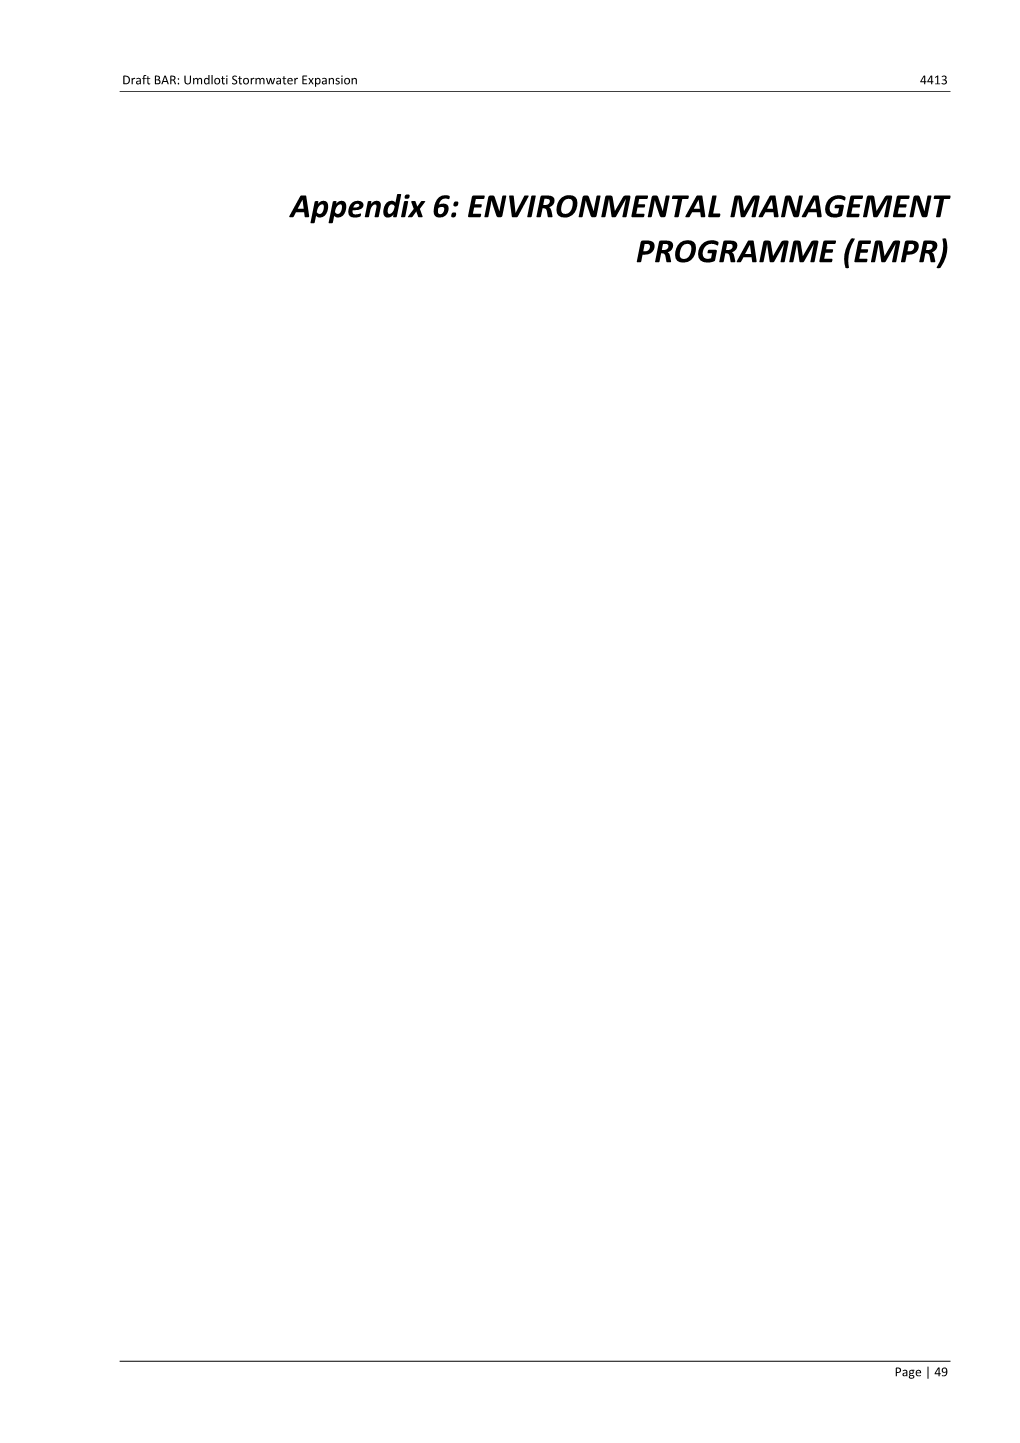 Environmental Management Programme (Empr)